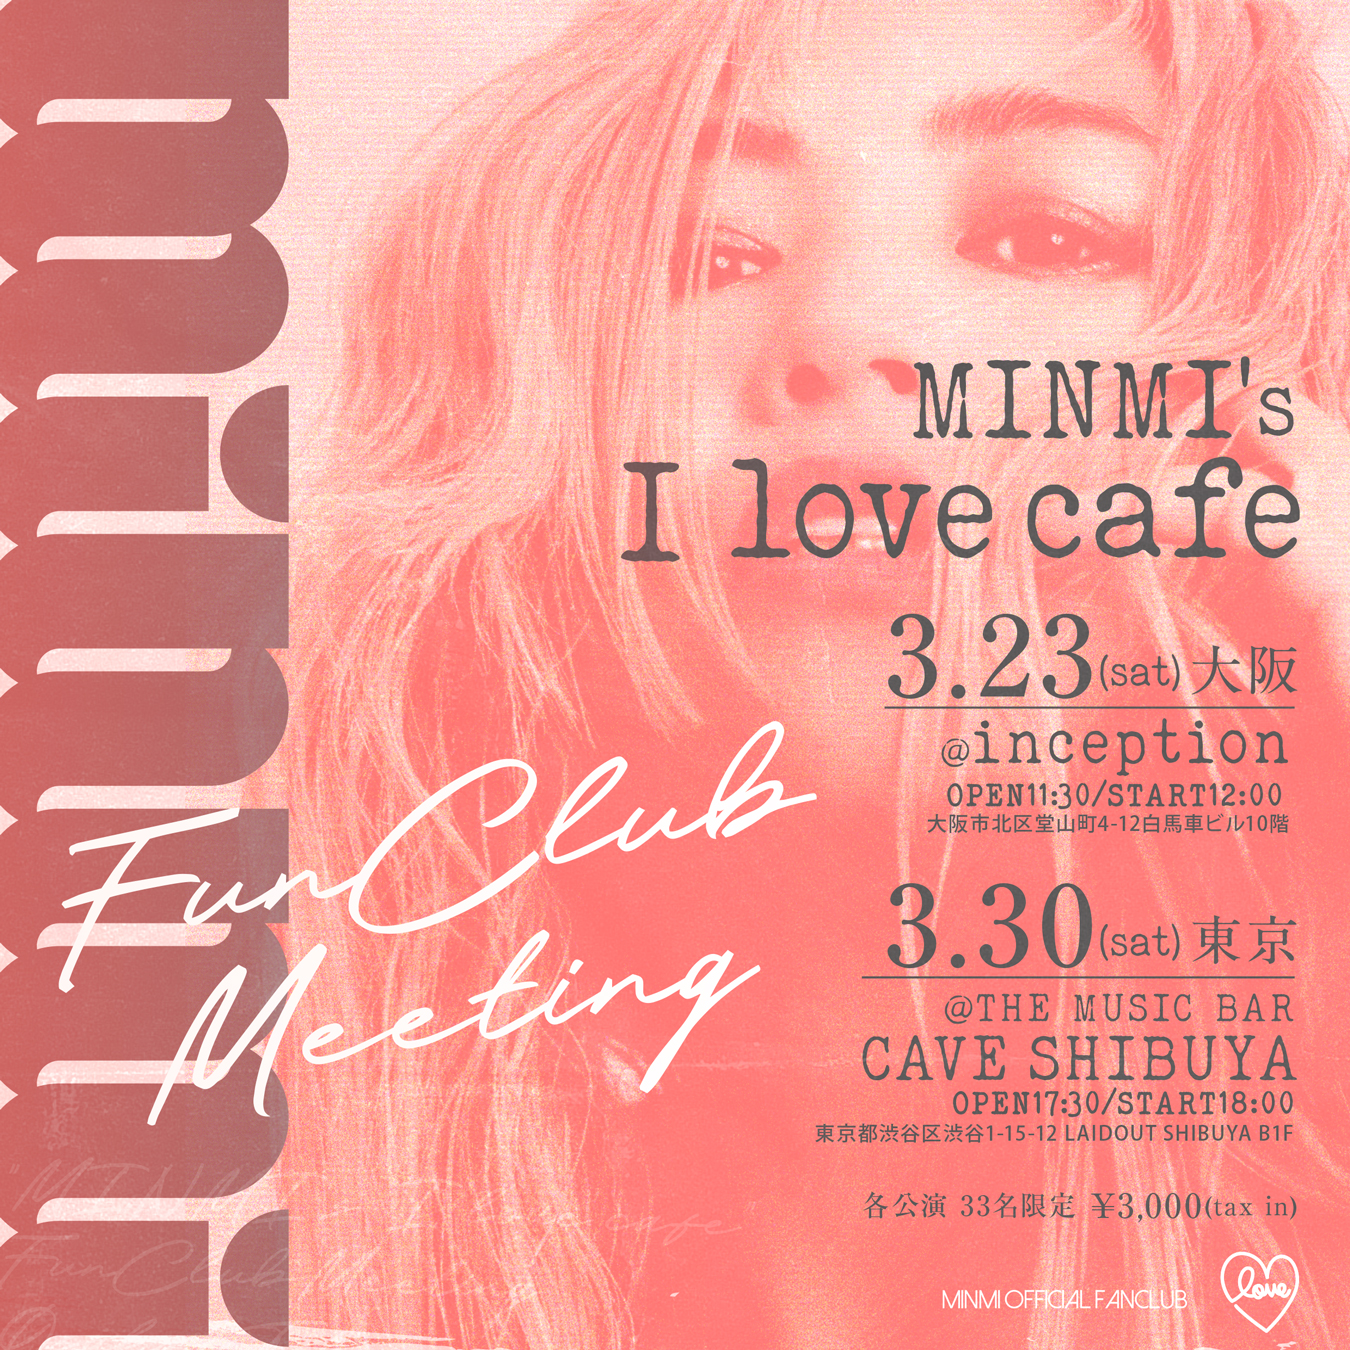 MINMI FUN CLUB MEETING " MINMI's I love cafe “